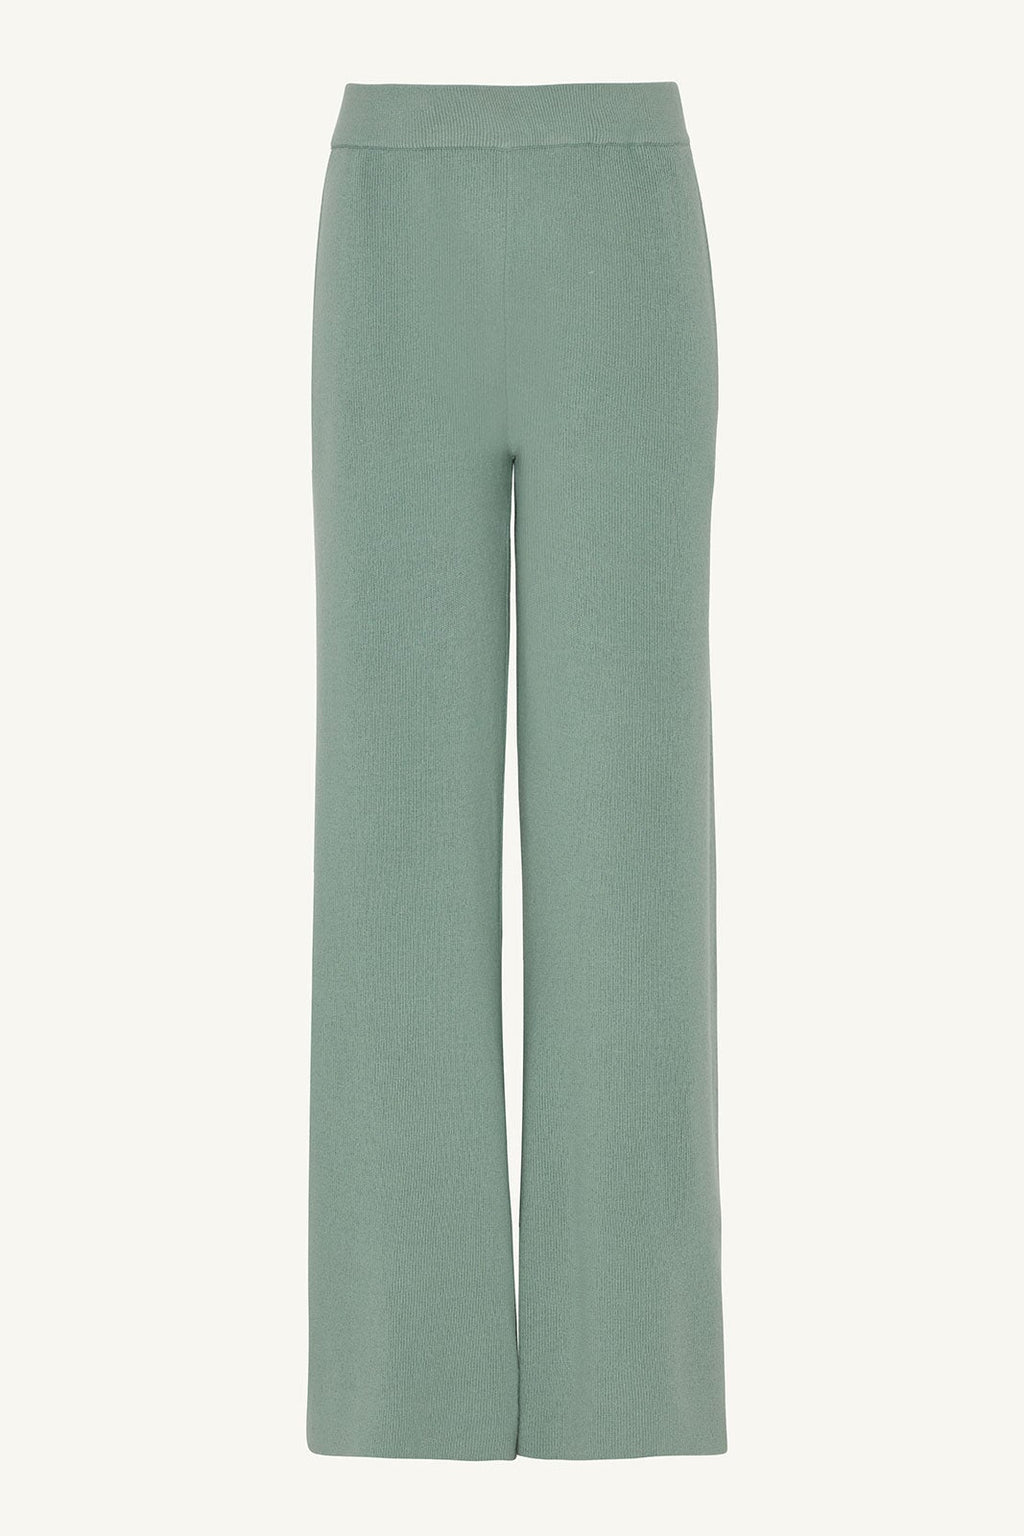 Stretch sage green merino wool double pleat Trousers